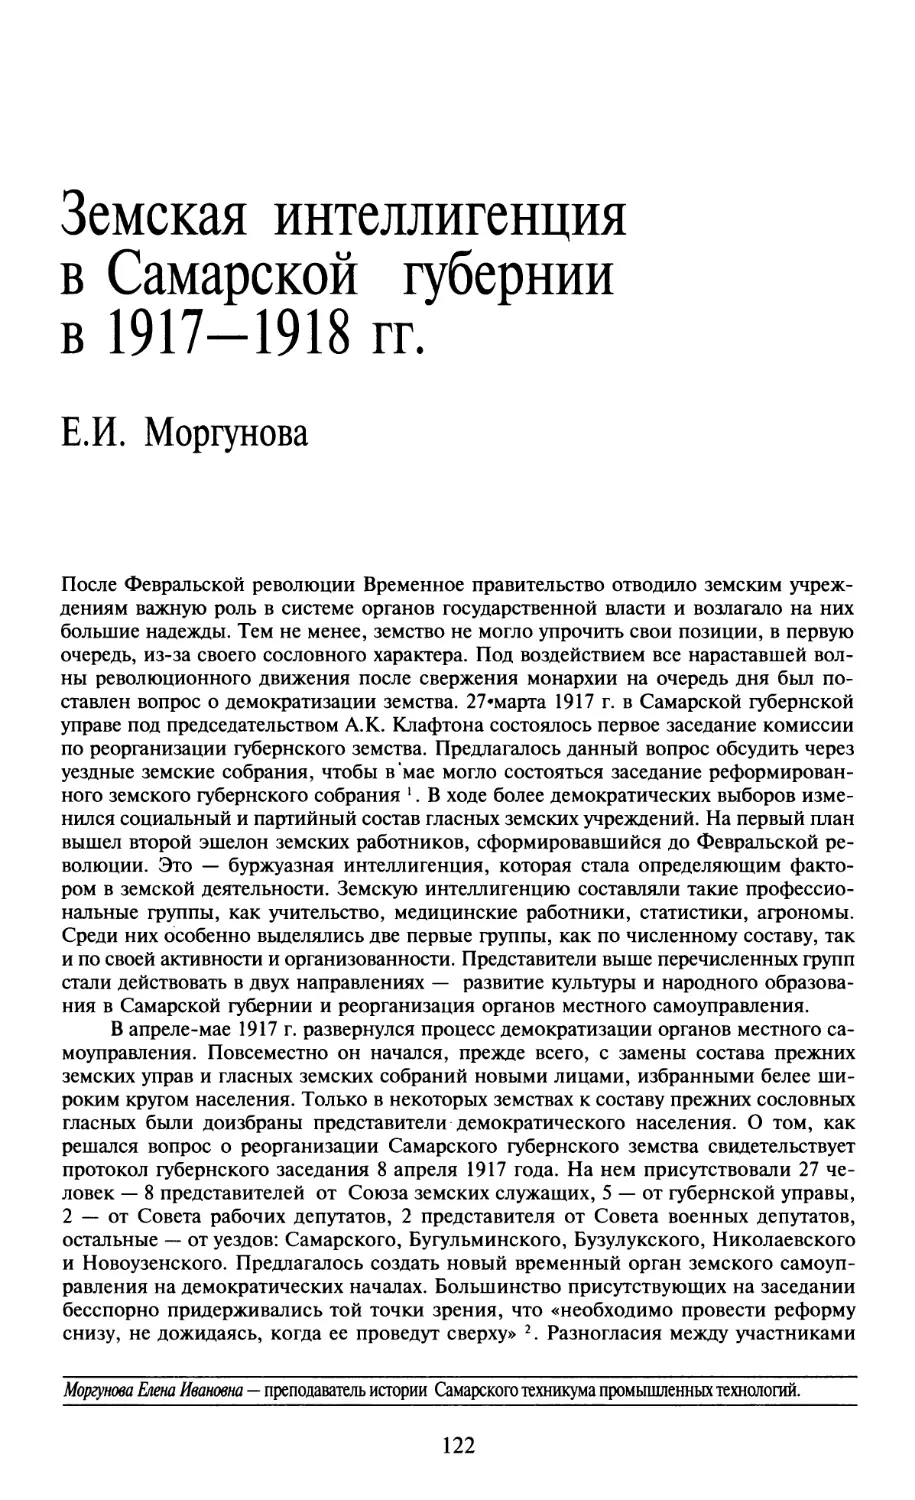 Е.И. Моргунова — Земская интеллигенция в Самарской губернии в 1917—1918 гг